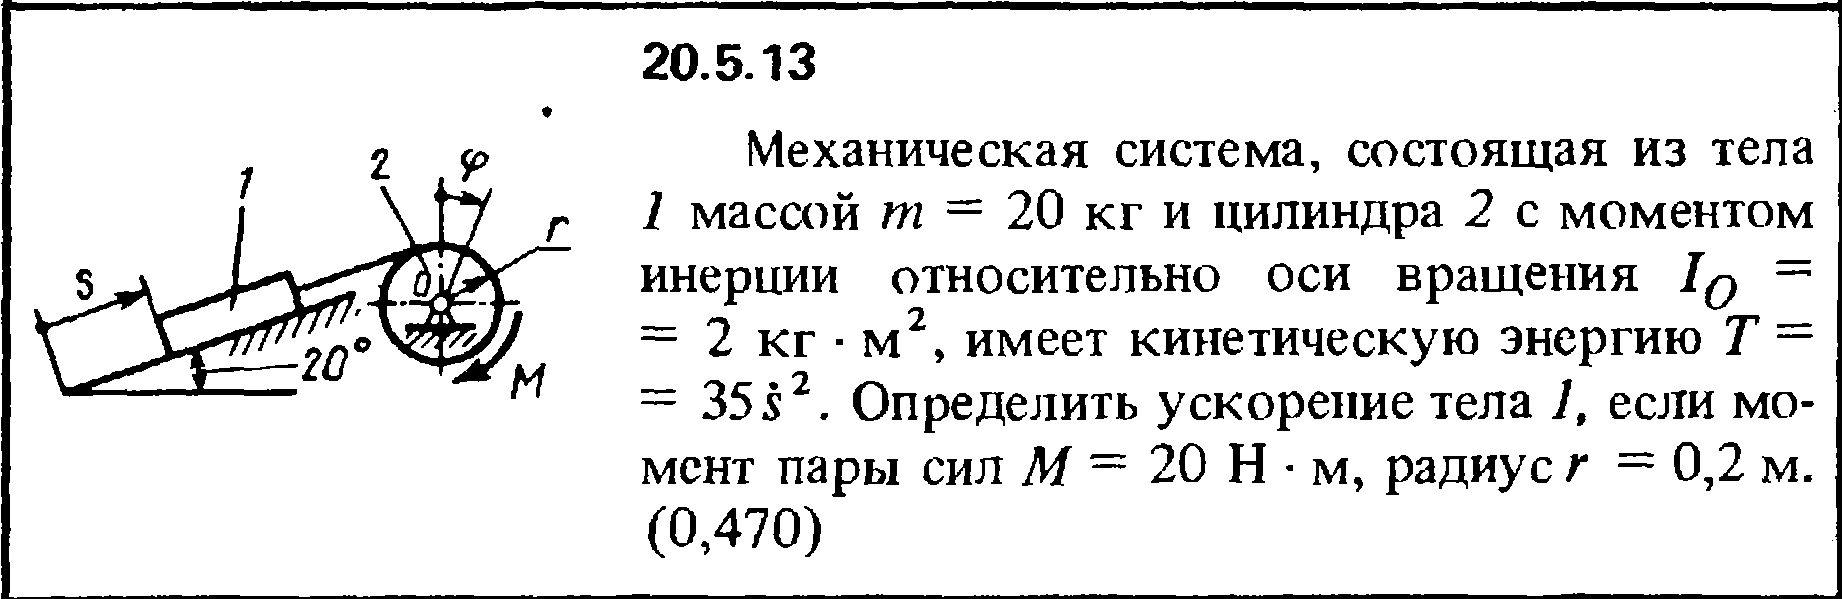 Решение 20.5.13 из сборника (решебника) Кепе О.Е. 1989